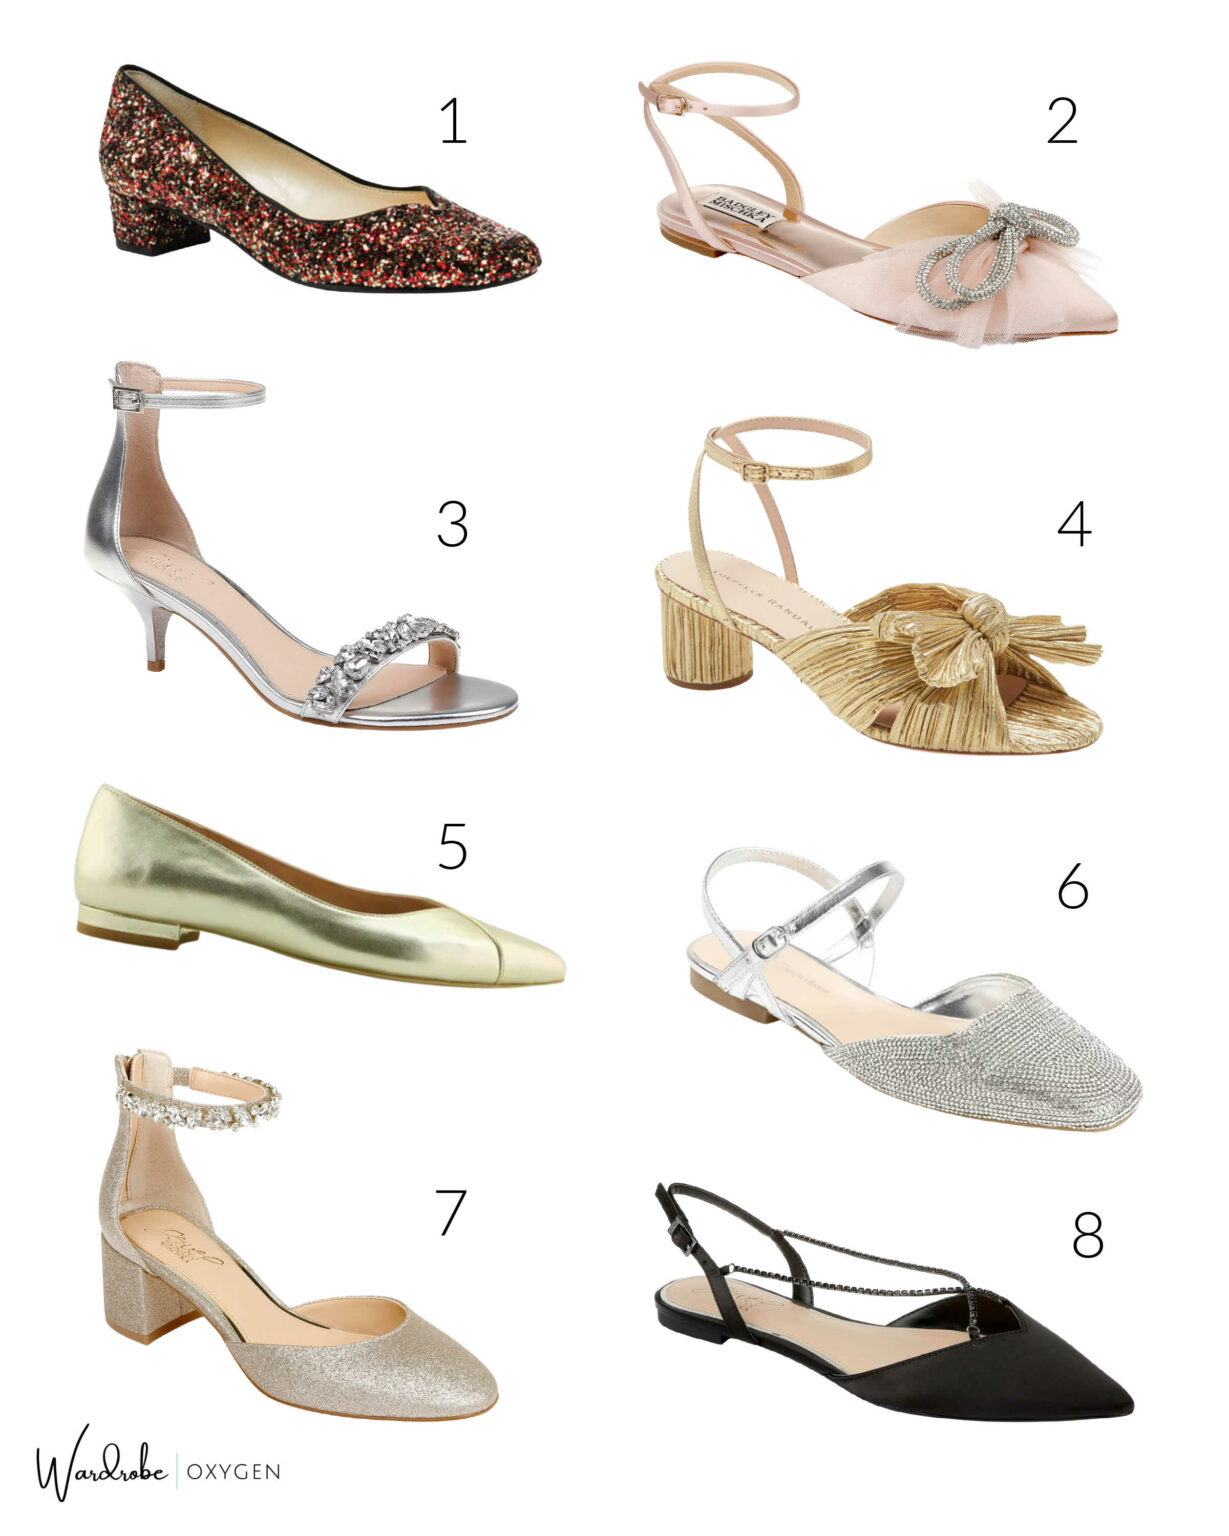 Dressy Flat Shoes: 40+ Chic Options - Wardrobe Oxygen